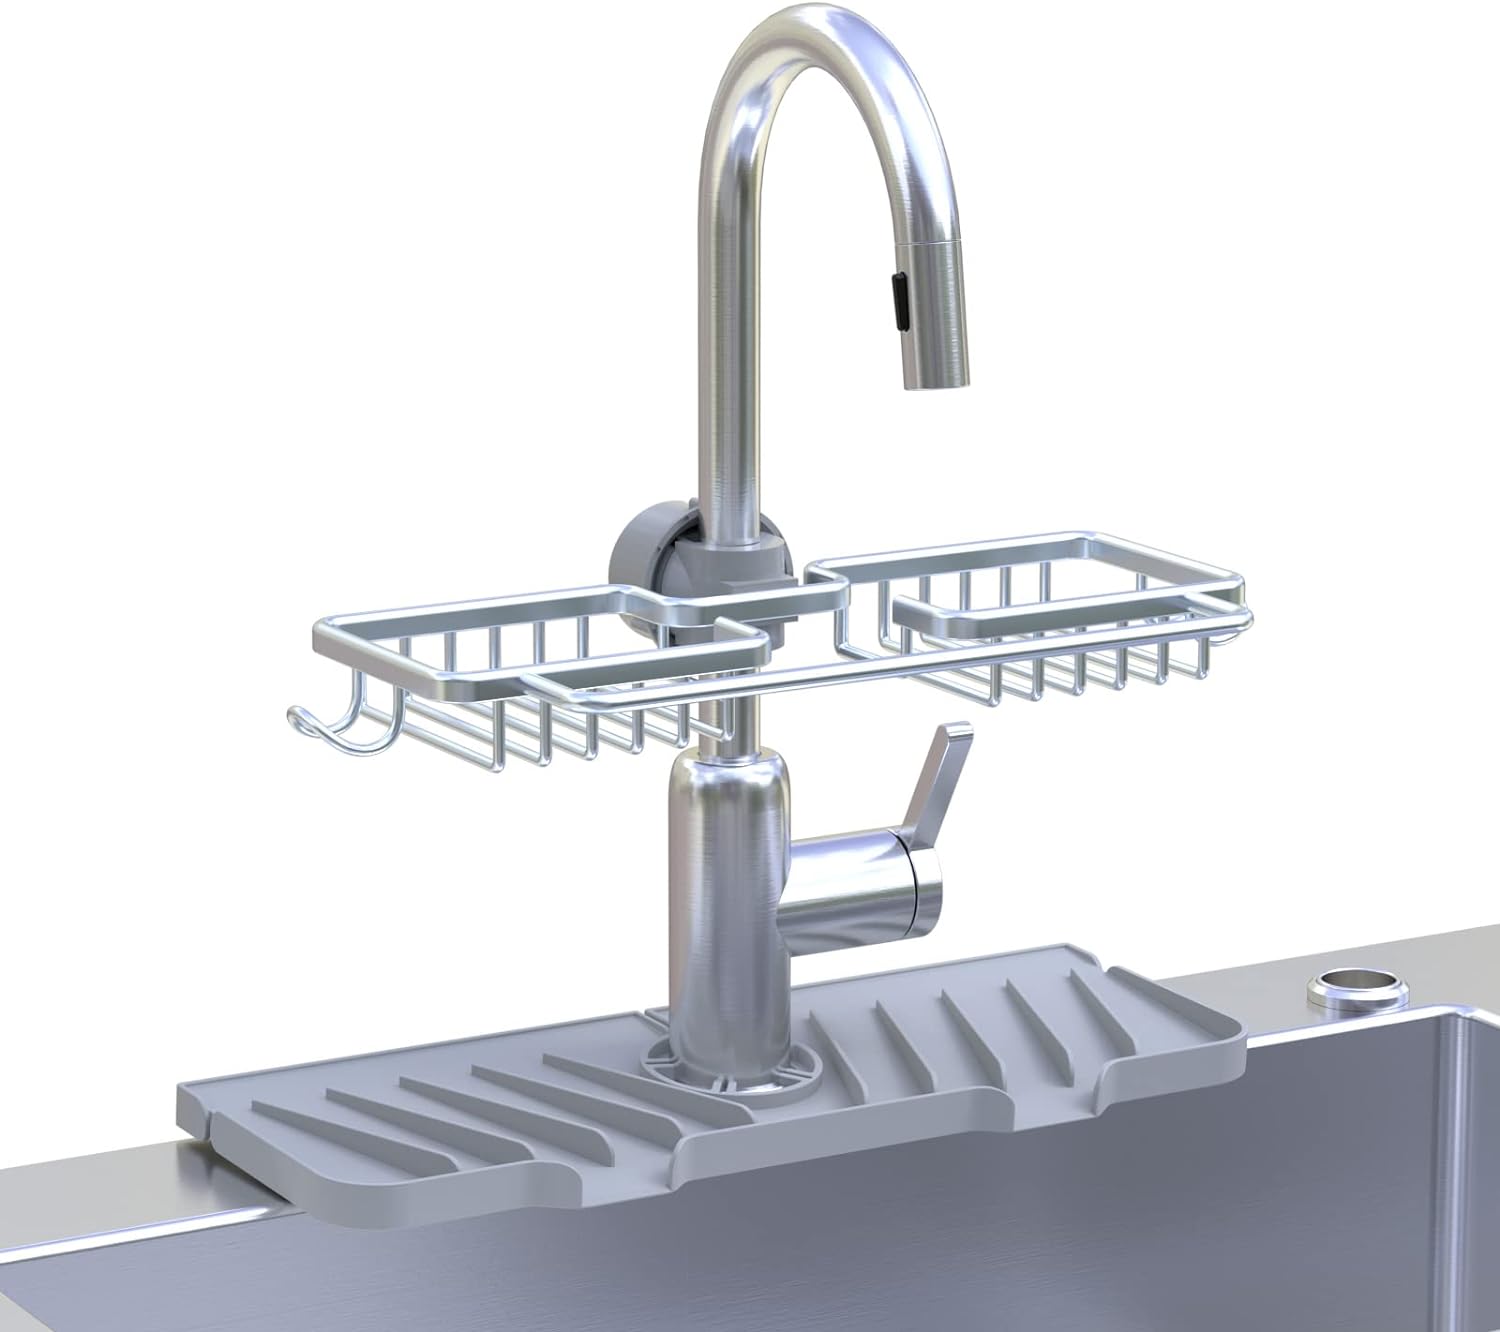 ISABETTA Faucet Sponge Holder with Hook and Silicone Faucet Sink Mat Sink Splash Guard Set,Detachable Hanging Faucet Drain Rack,Kitchen